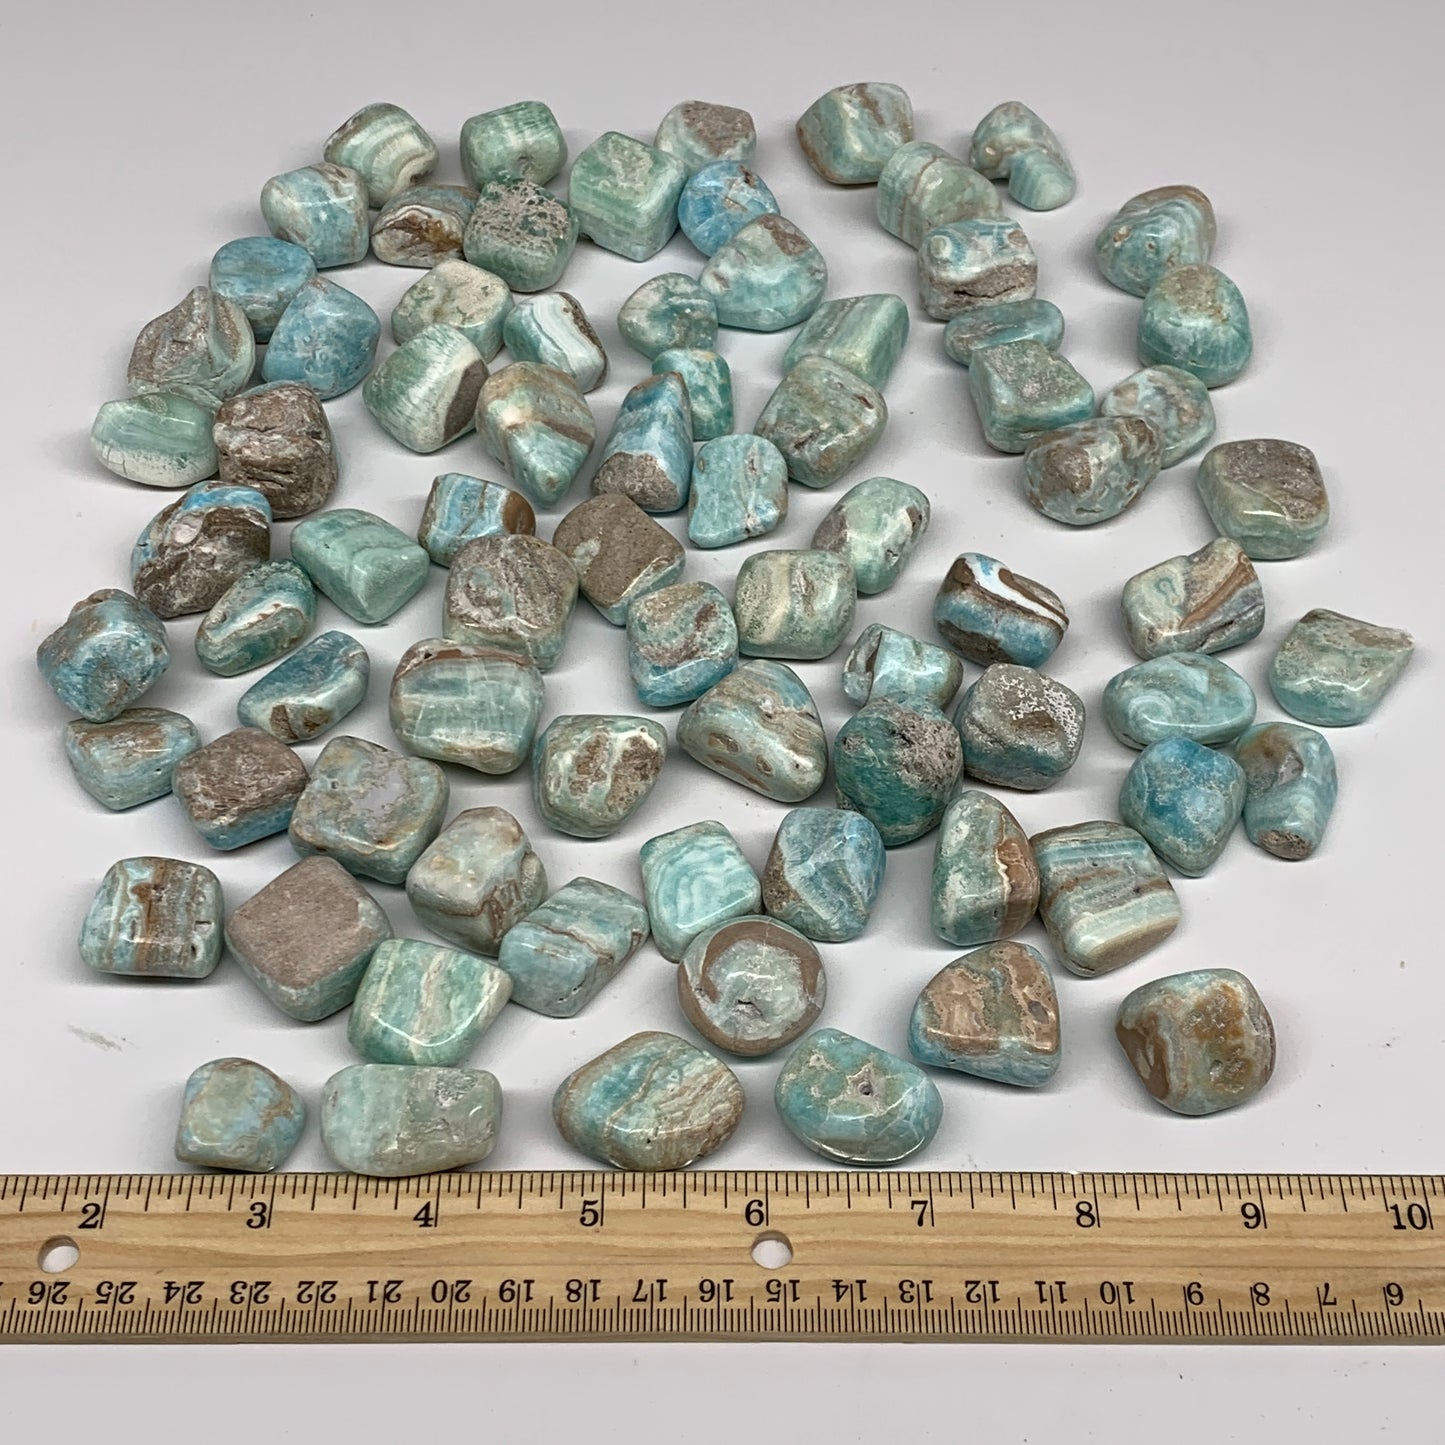 1000g, 0.8"-1.1", 77pcs, Blue Aragonite Tumbled Crystal Stones @Afghanistan, B26